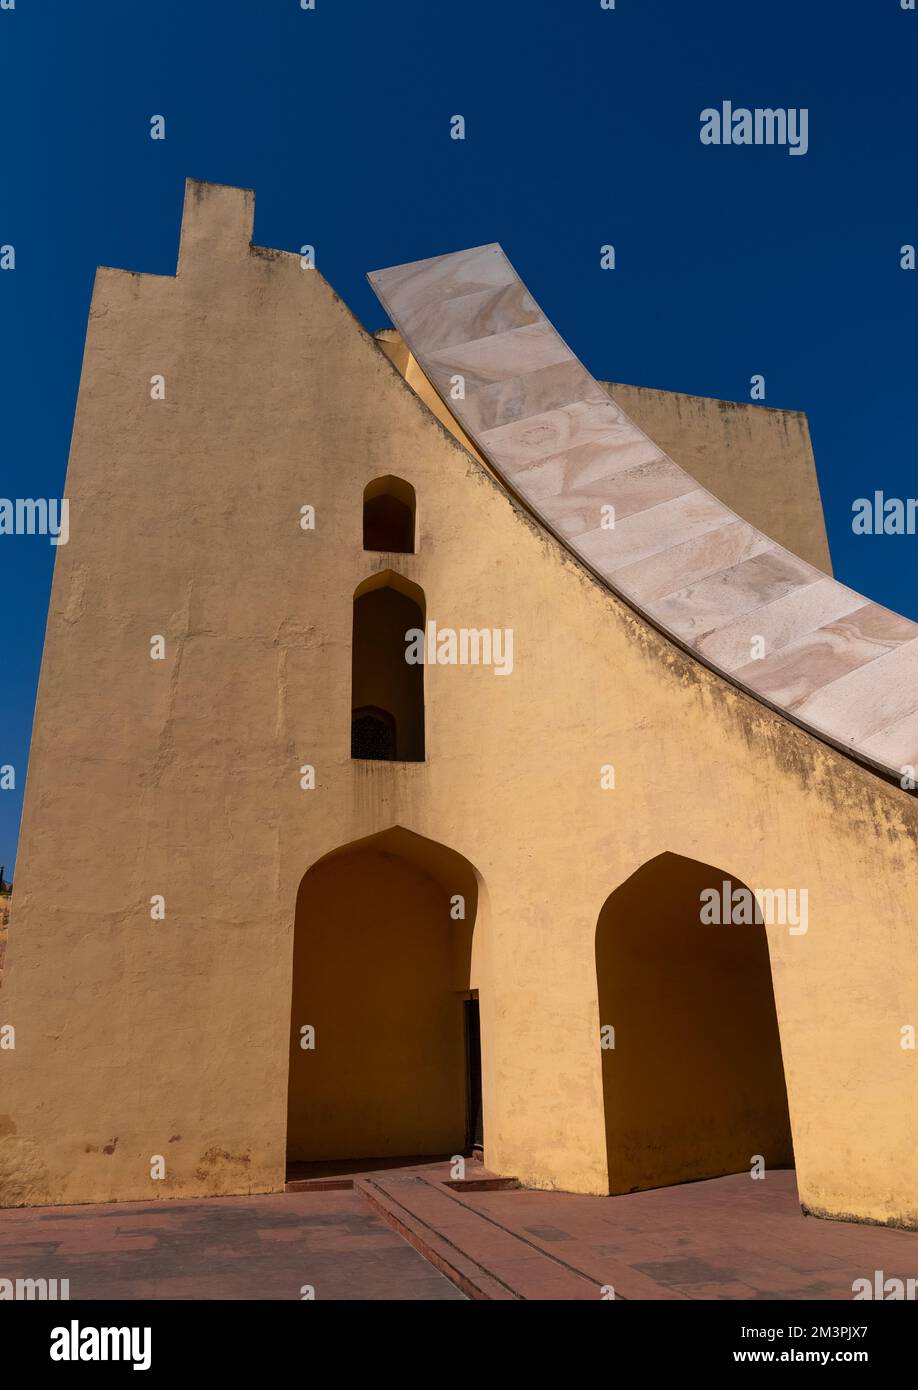 Jantar Mantar astronomical observation site, Rajasthan, Jaipur, India Stock Photo